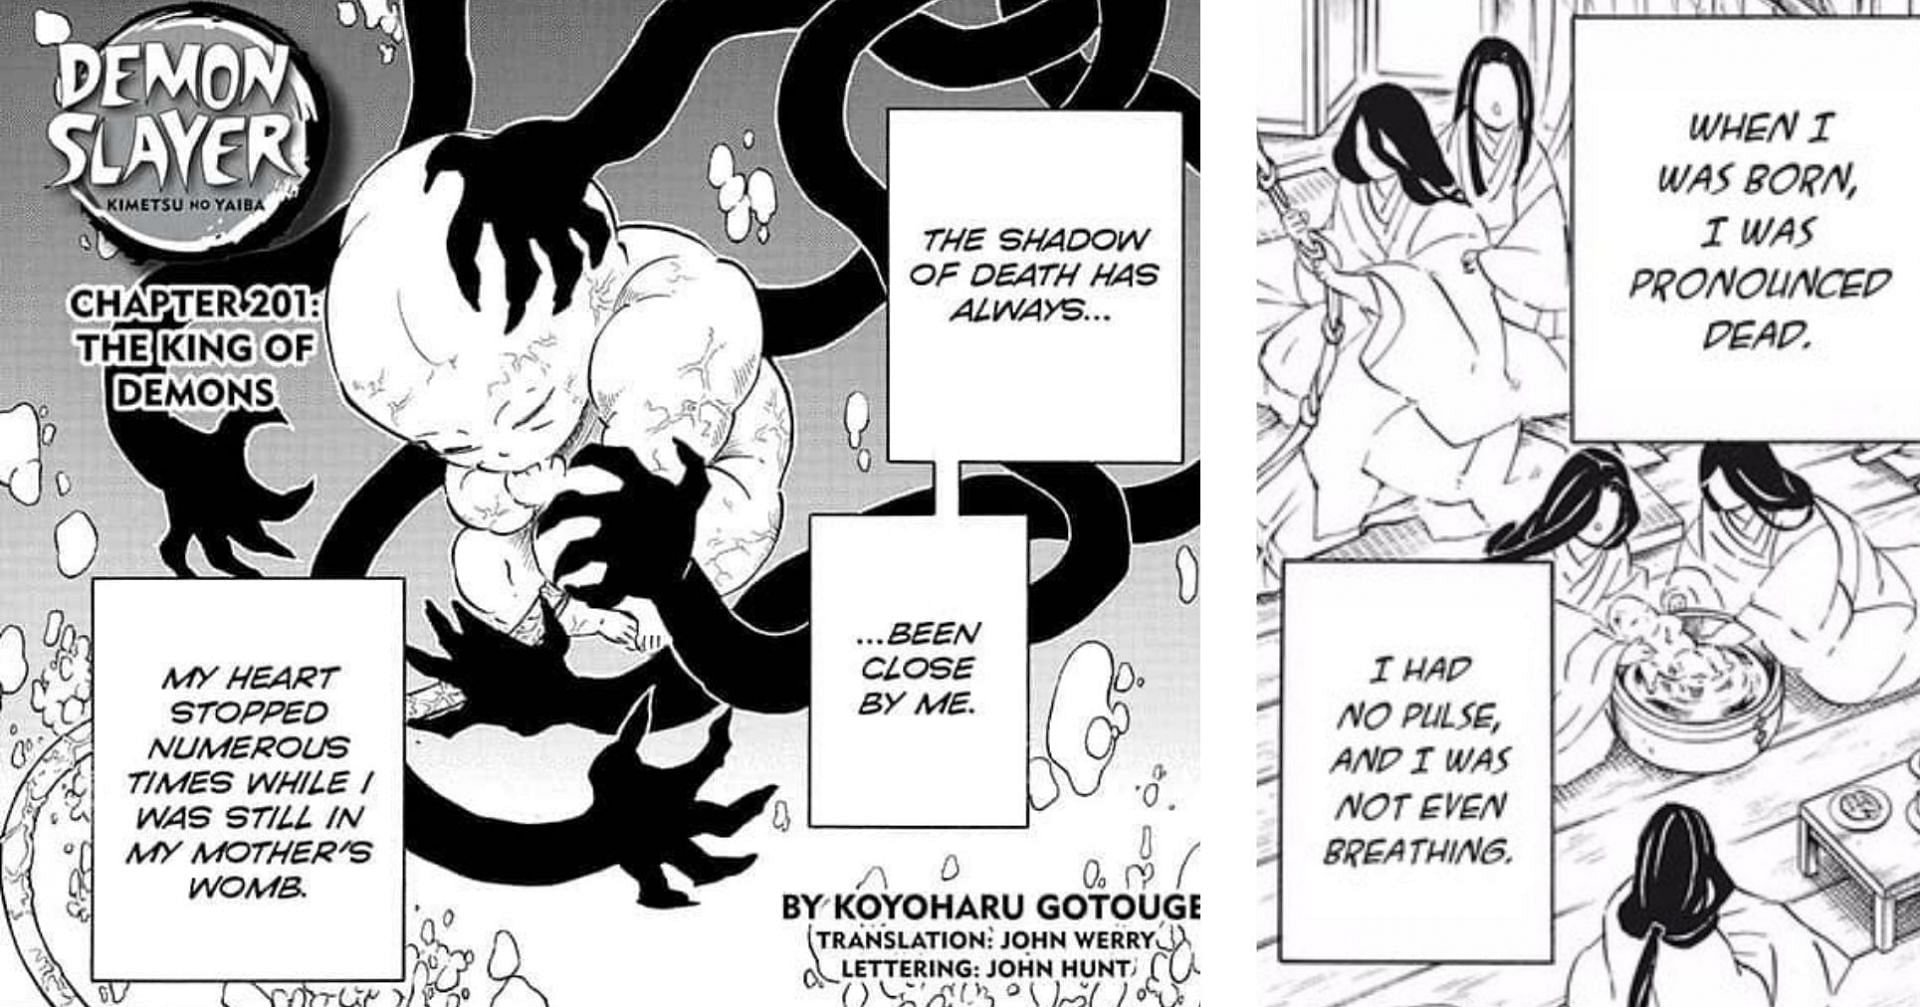 Muzan as seen in the Demon Slayer manga (Image via Shueisha)